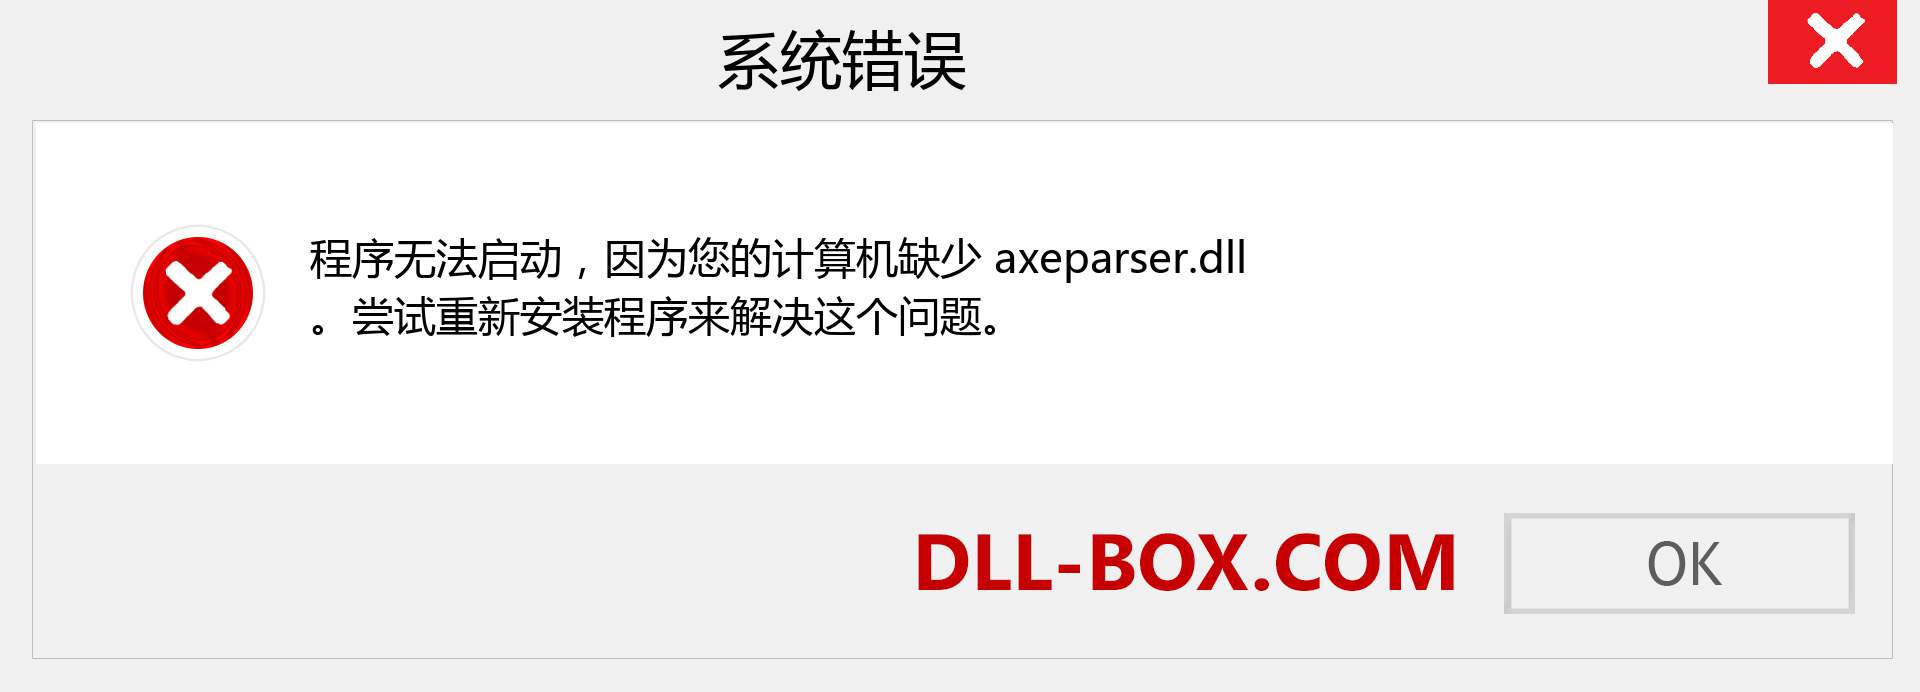 axeparser.dll 文件丢失？。 适用于 Windows 7、8、10 的下载 - 修复 Windows、照片、图像上的 axeparser dll 丢失错误